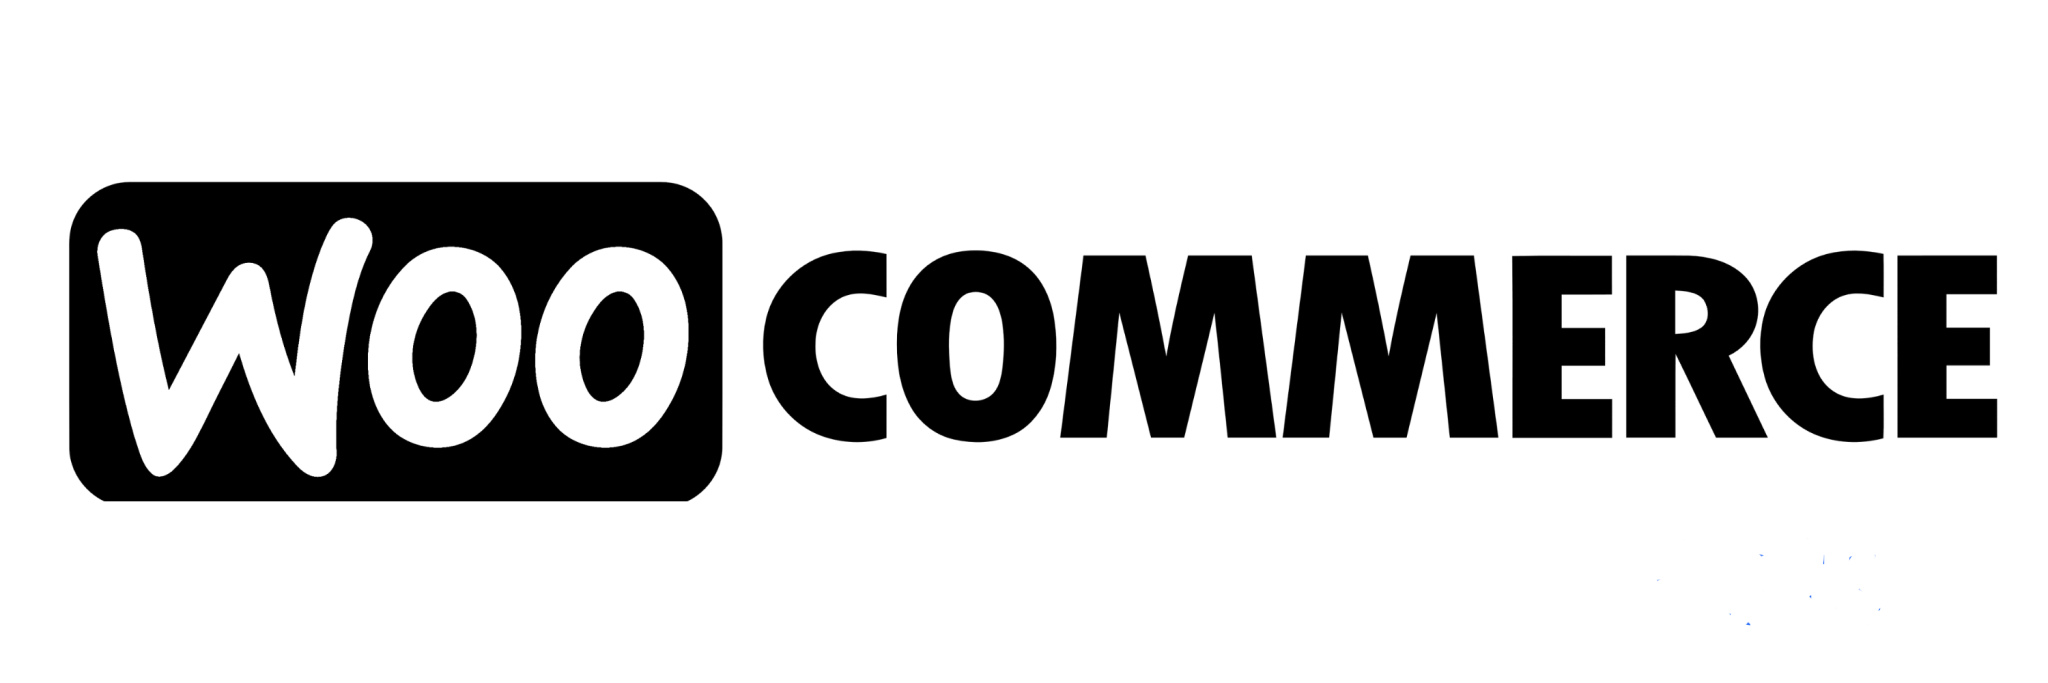 logo de woocommerce